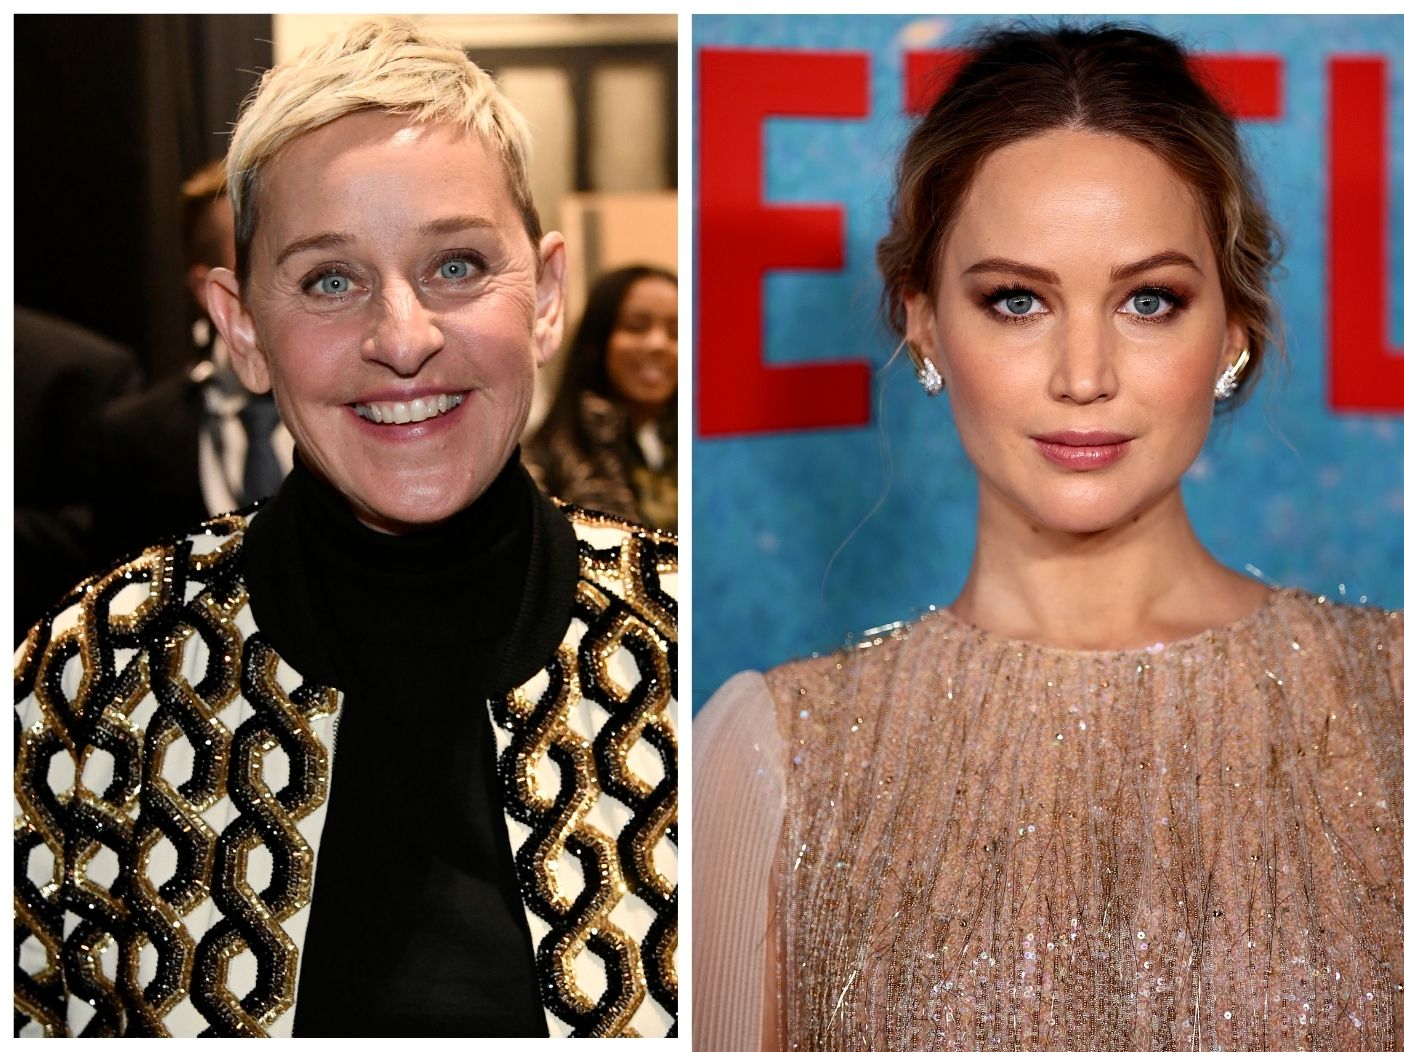 Ellen Degeneres Accidently Revealed Gender Of Jennifer Lawrence’s Baby